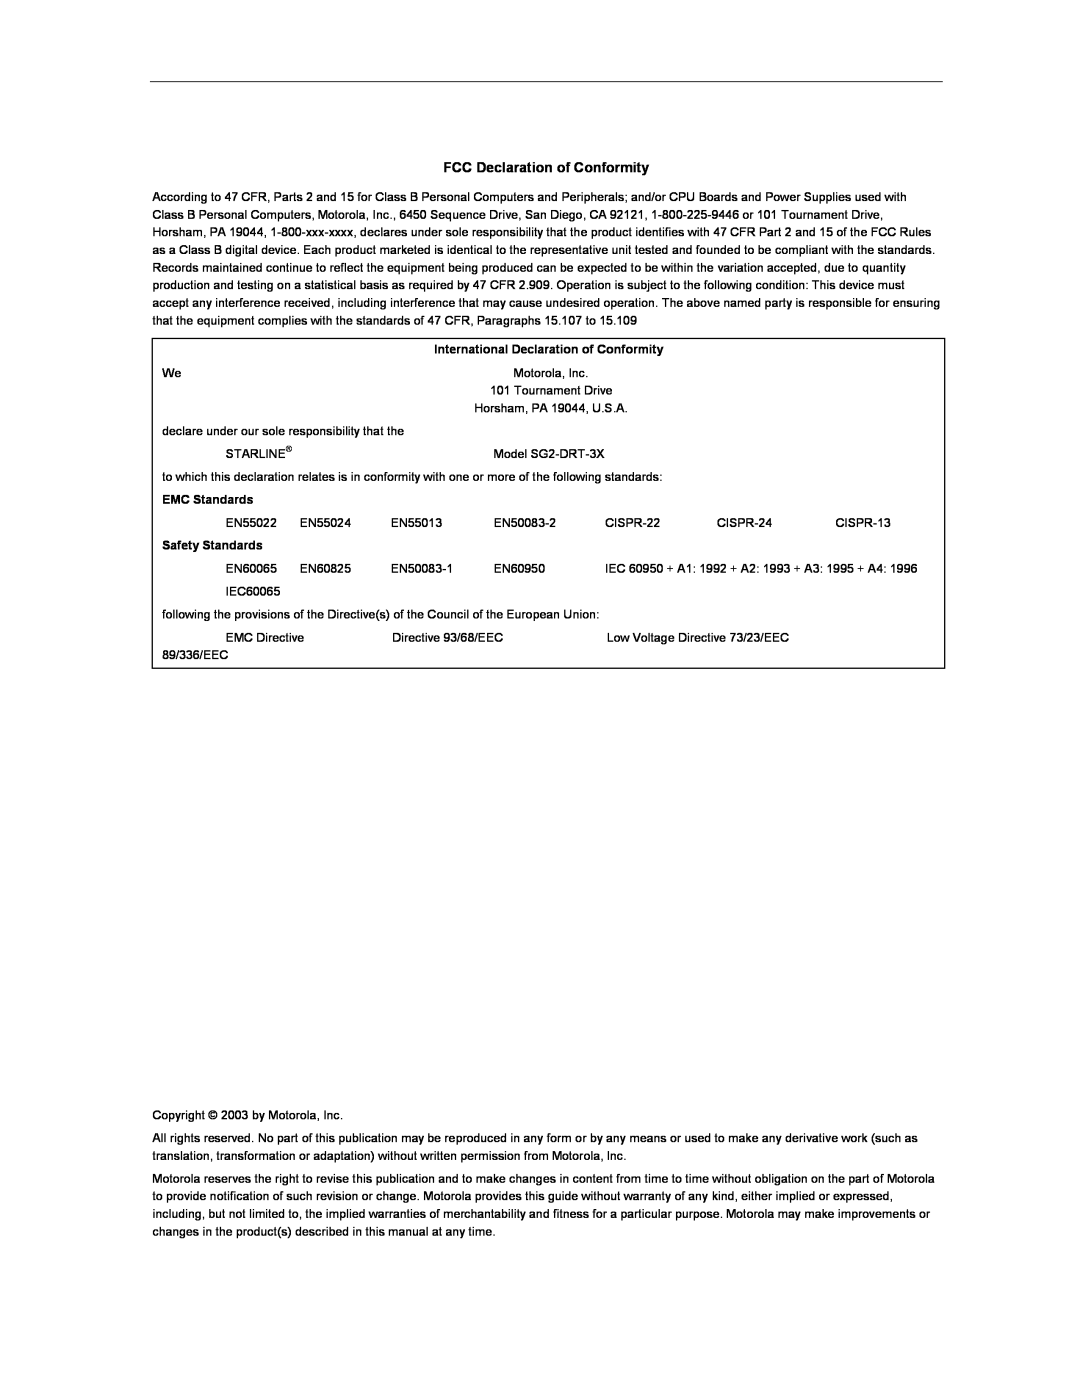 Cuisinart SG2-DRT-3X operation manual FCC Declaration of Conformity, International Declaration of Conformity, EMC Standards 